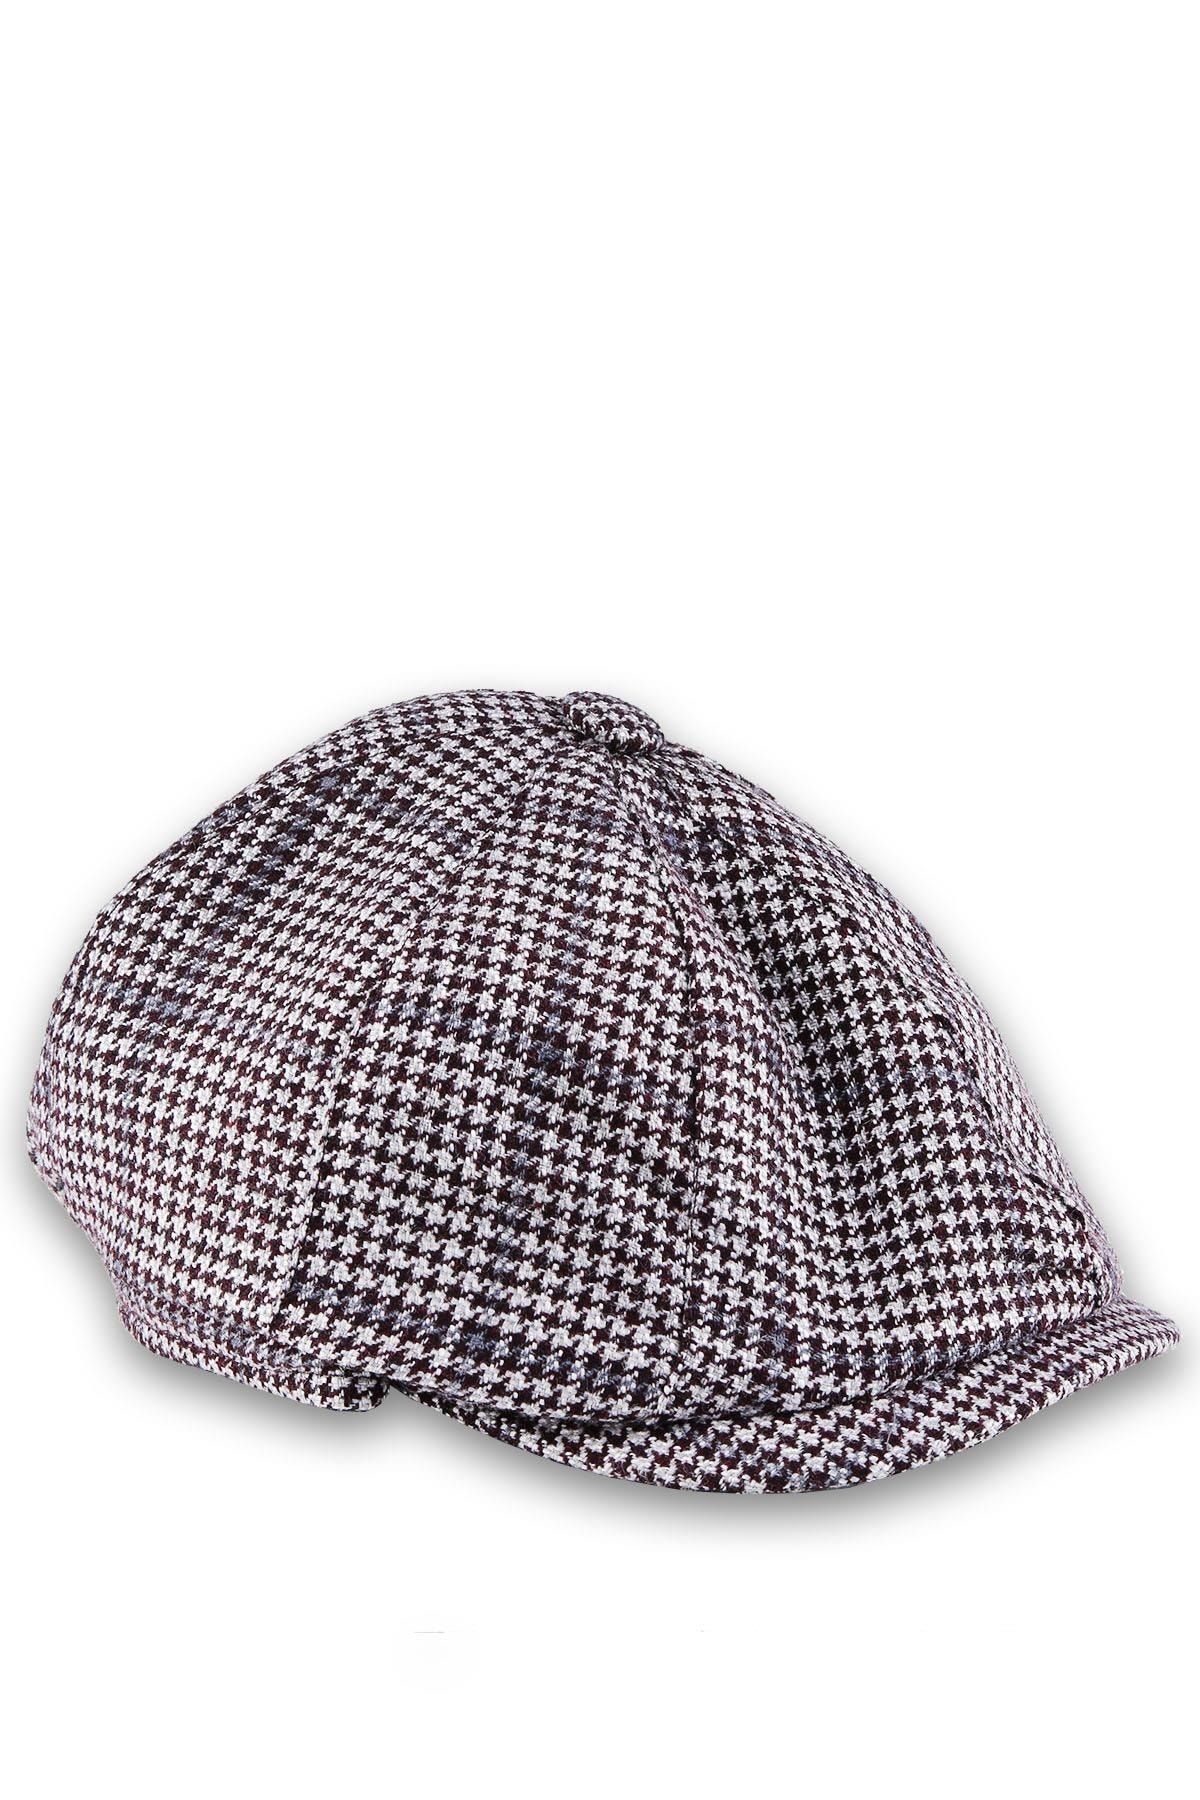 Kravatkolik La Pescara Beyaz - Kahve Yün Erkek Kasket Şapka Kst17